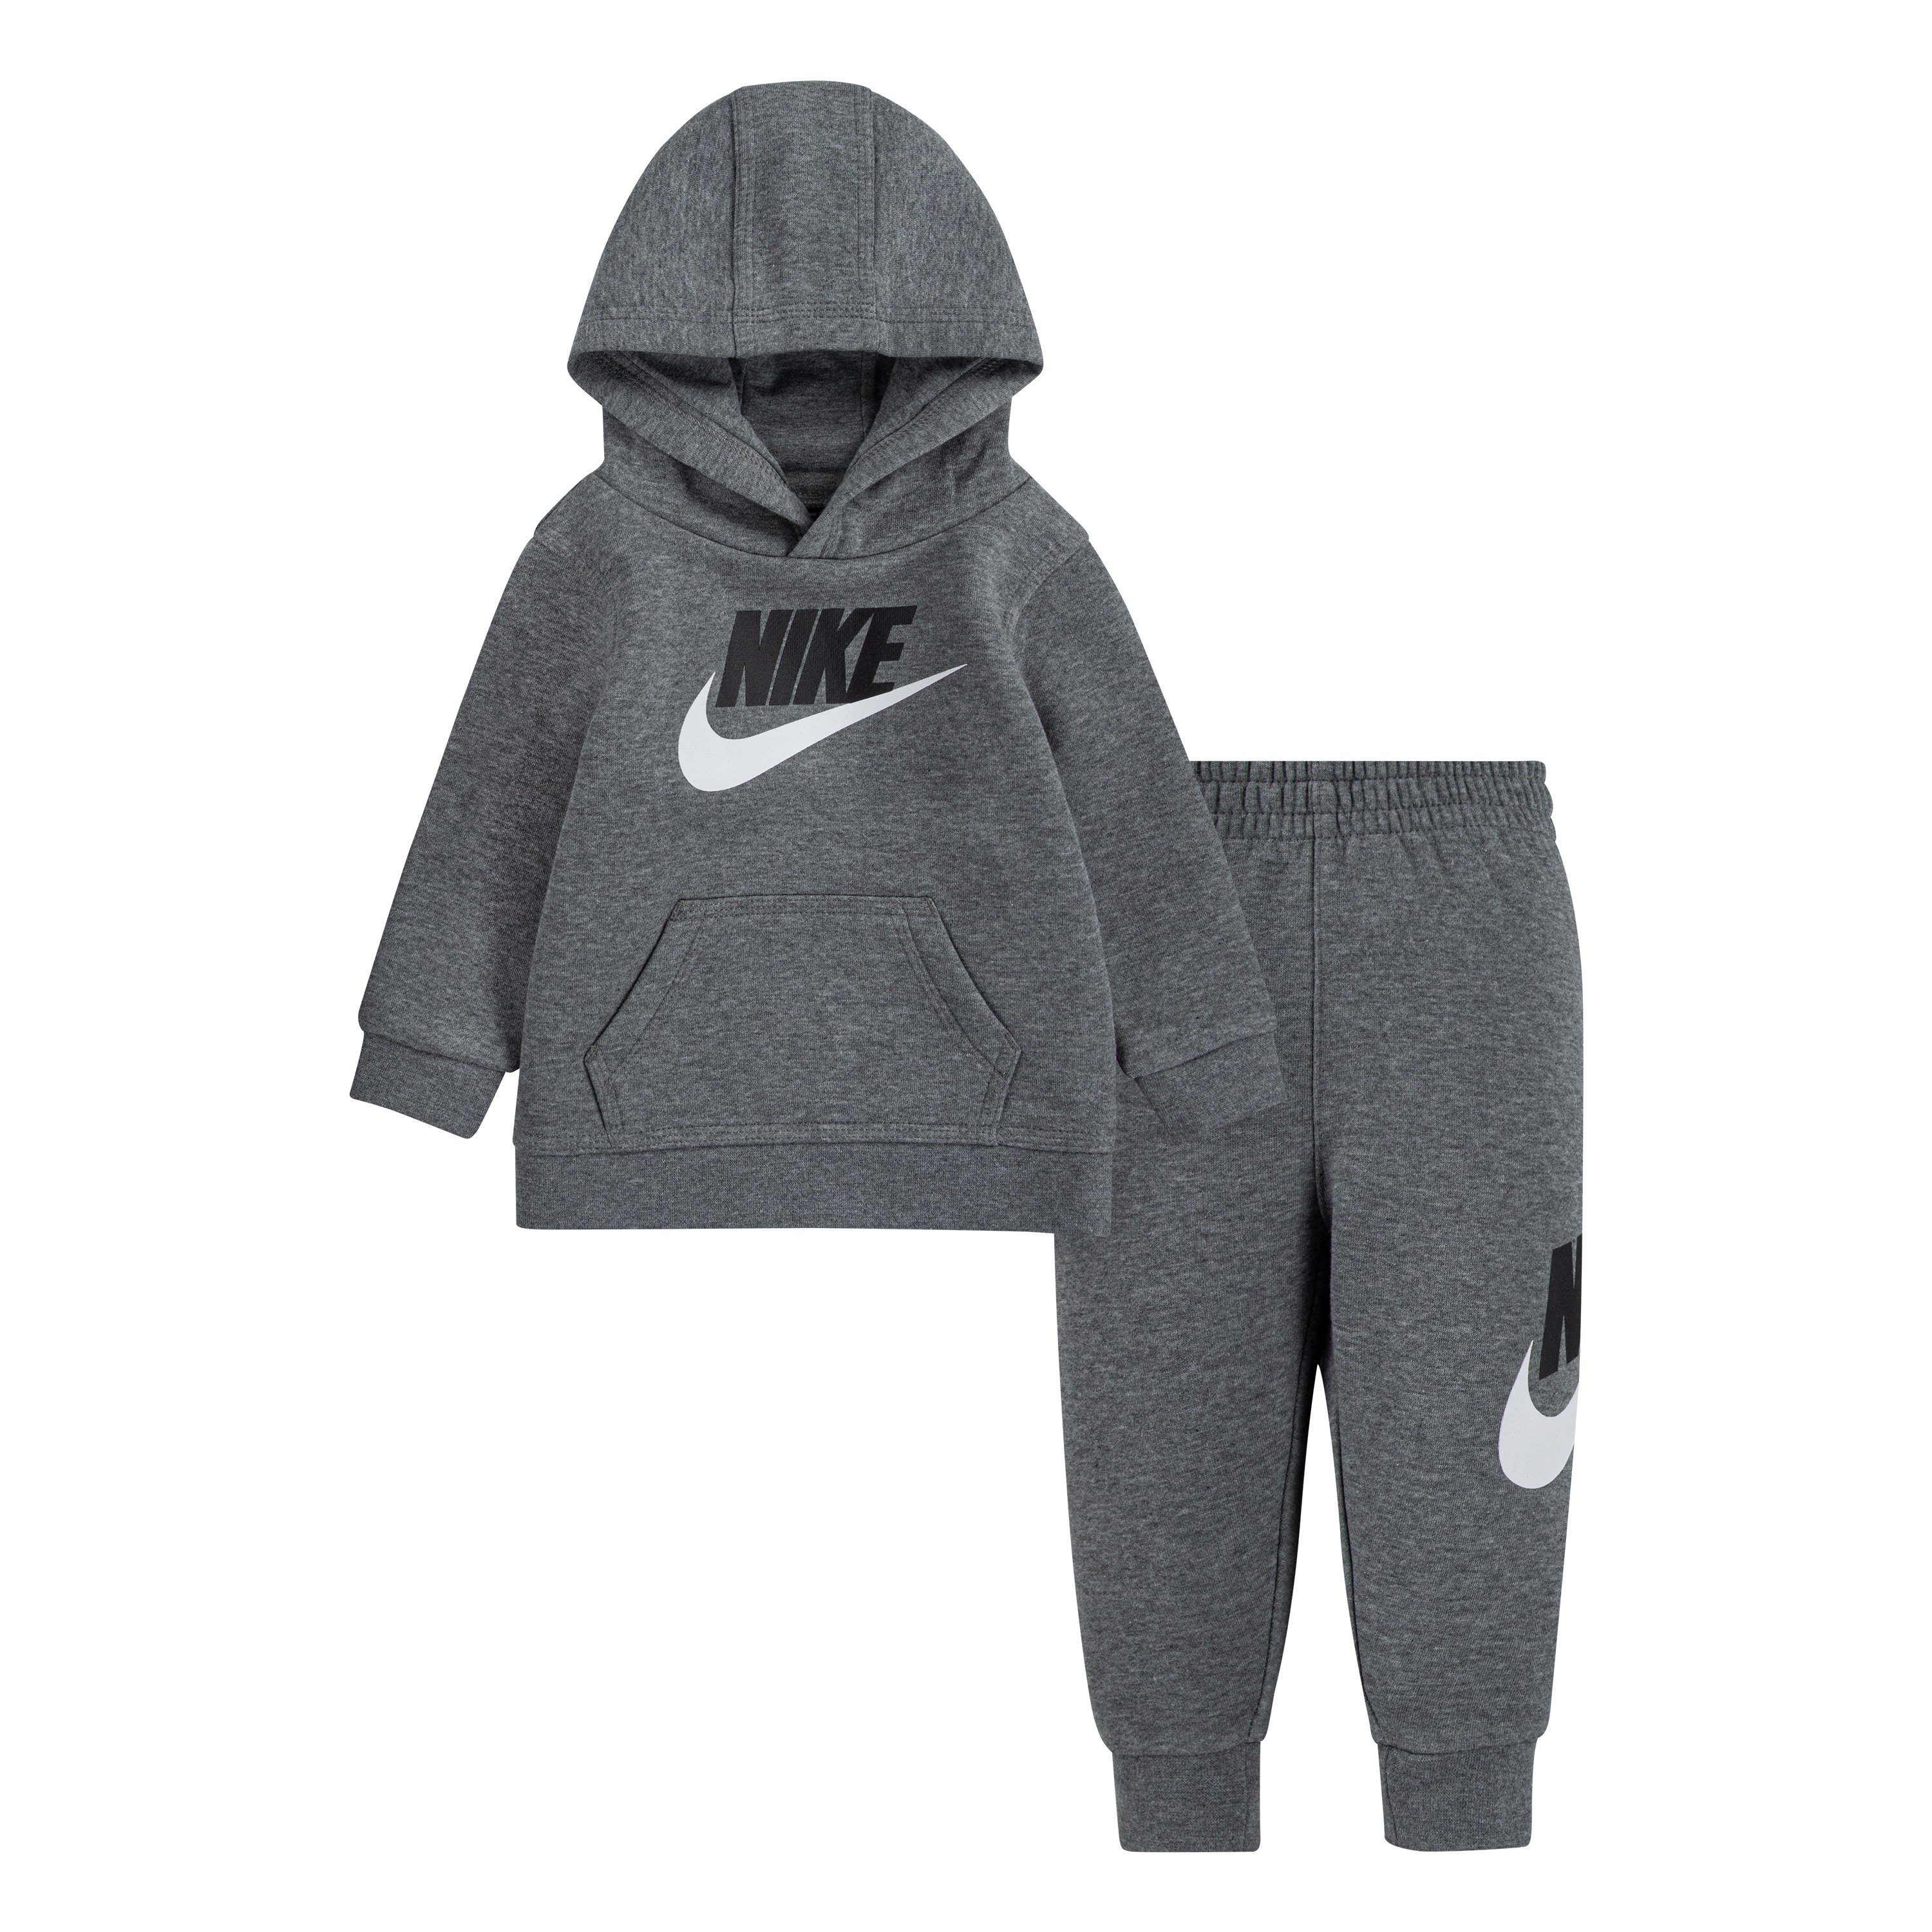 & FLEECE 2PC Nike PO HOODIE Jogginganzug JOGGER (Set, 2-tlg) Sportswear SET grau-meliert